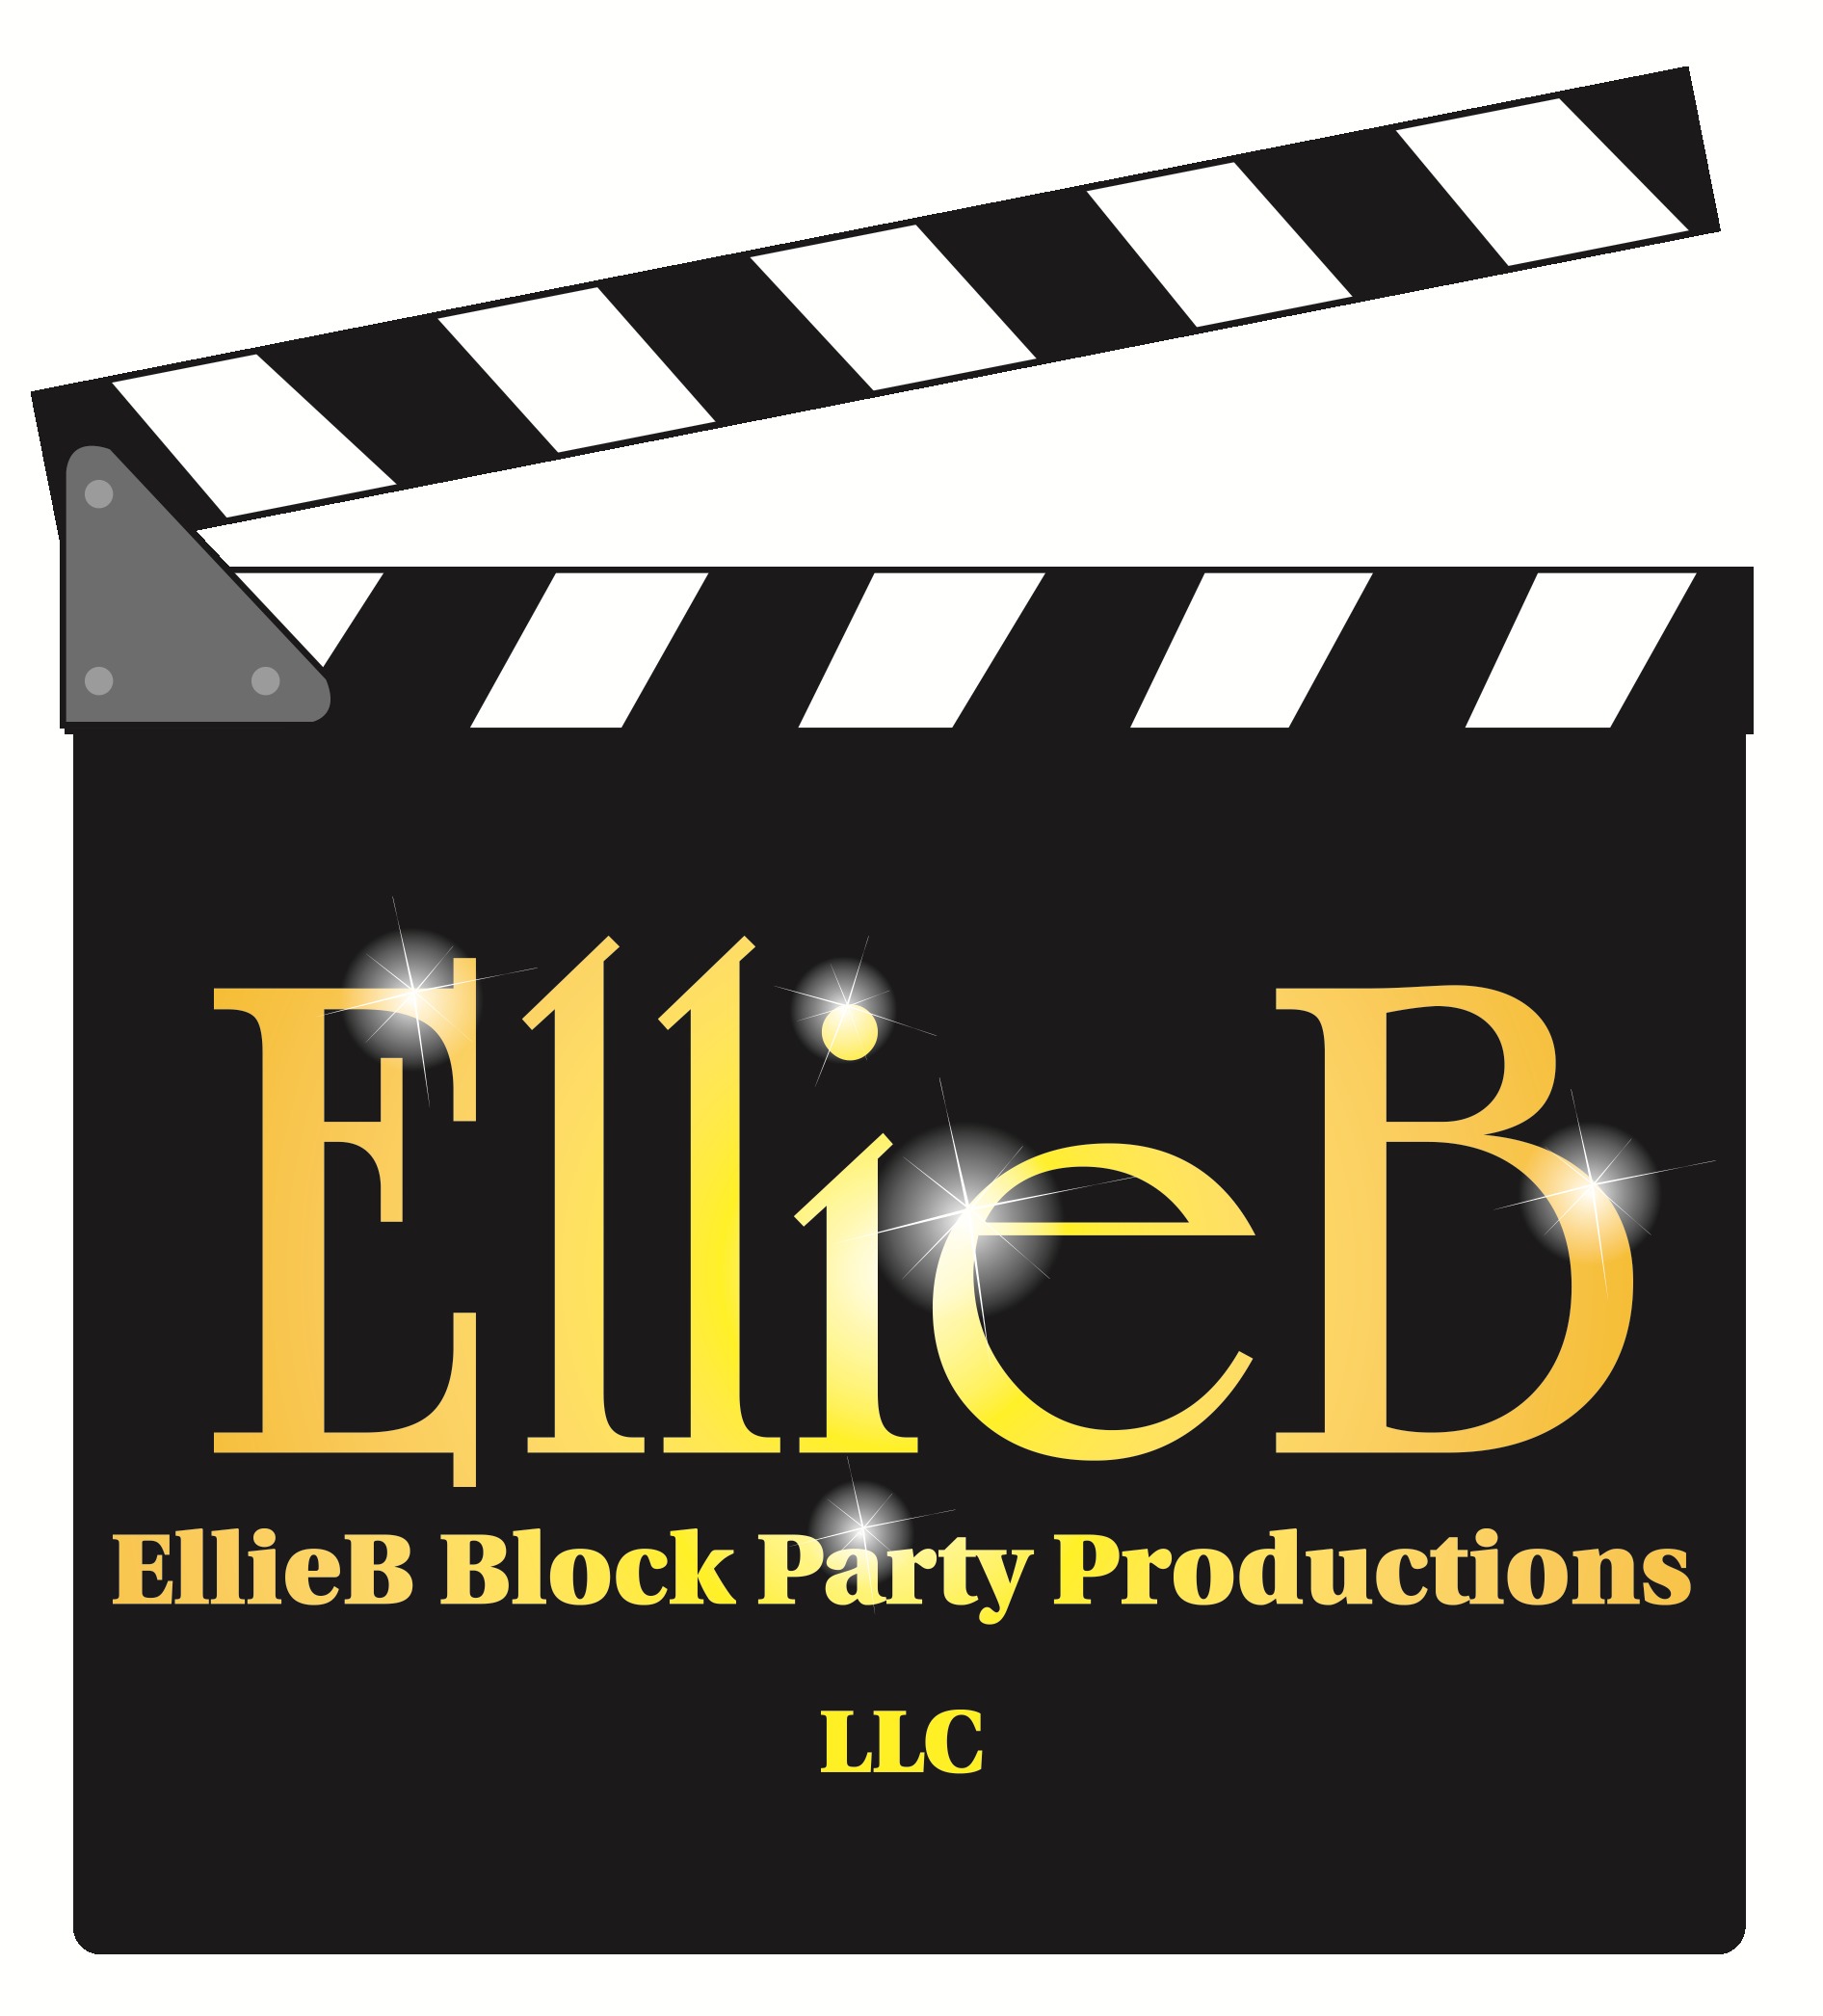 EllieB Block Party Productions LLC